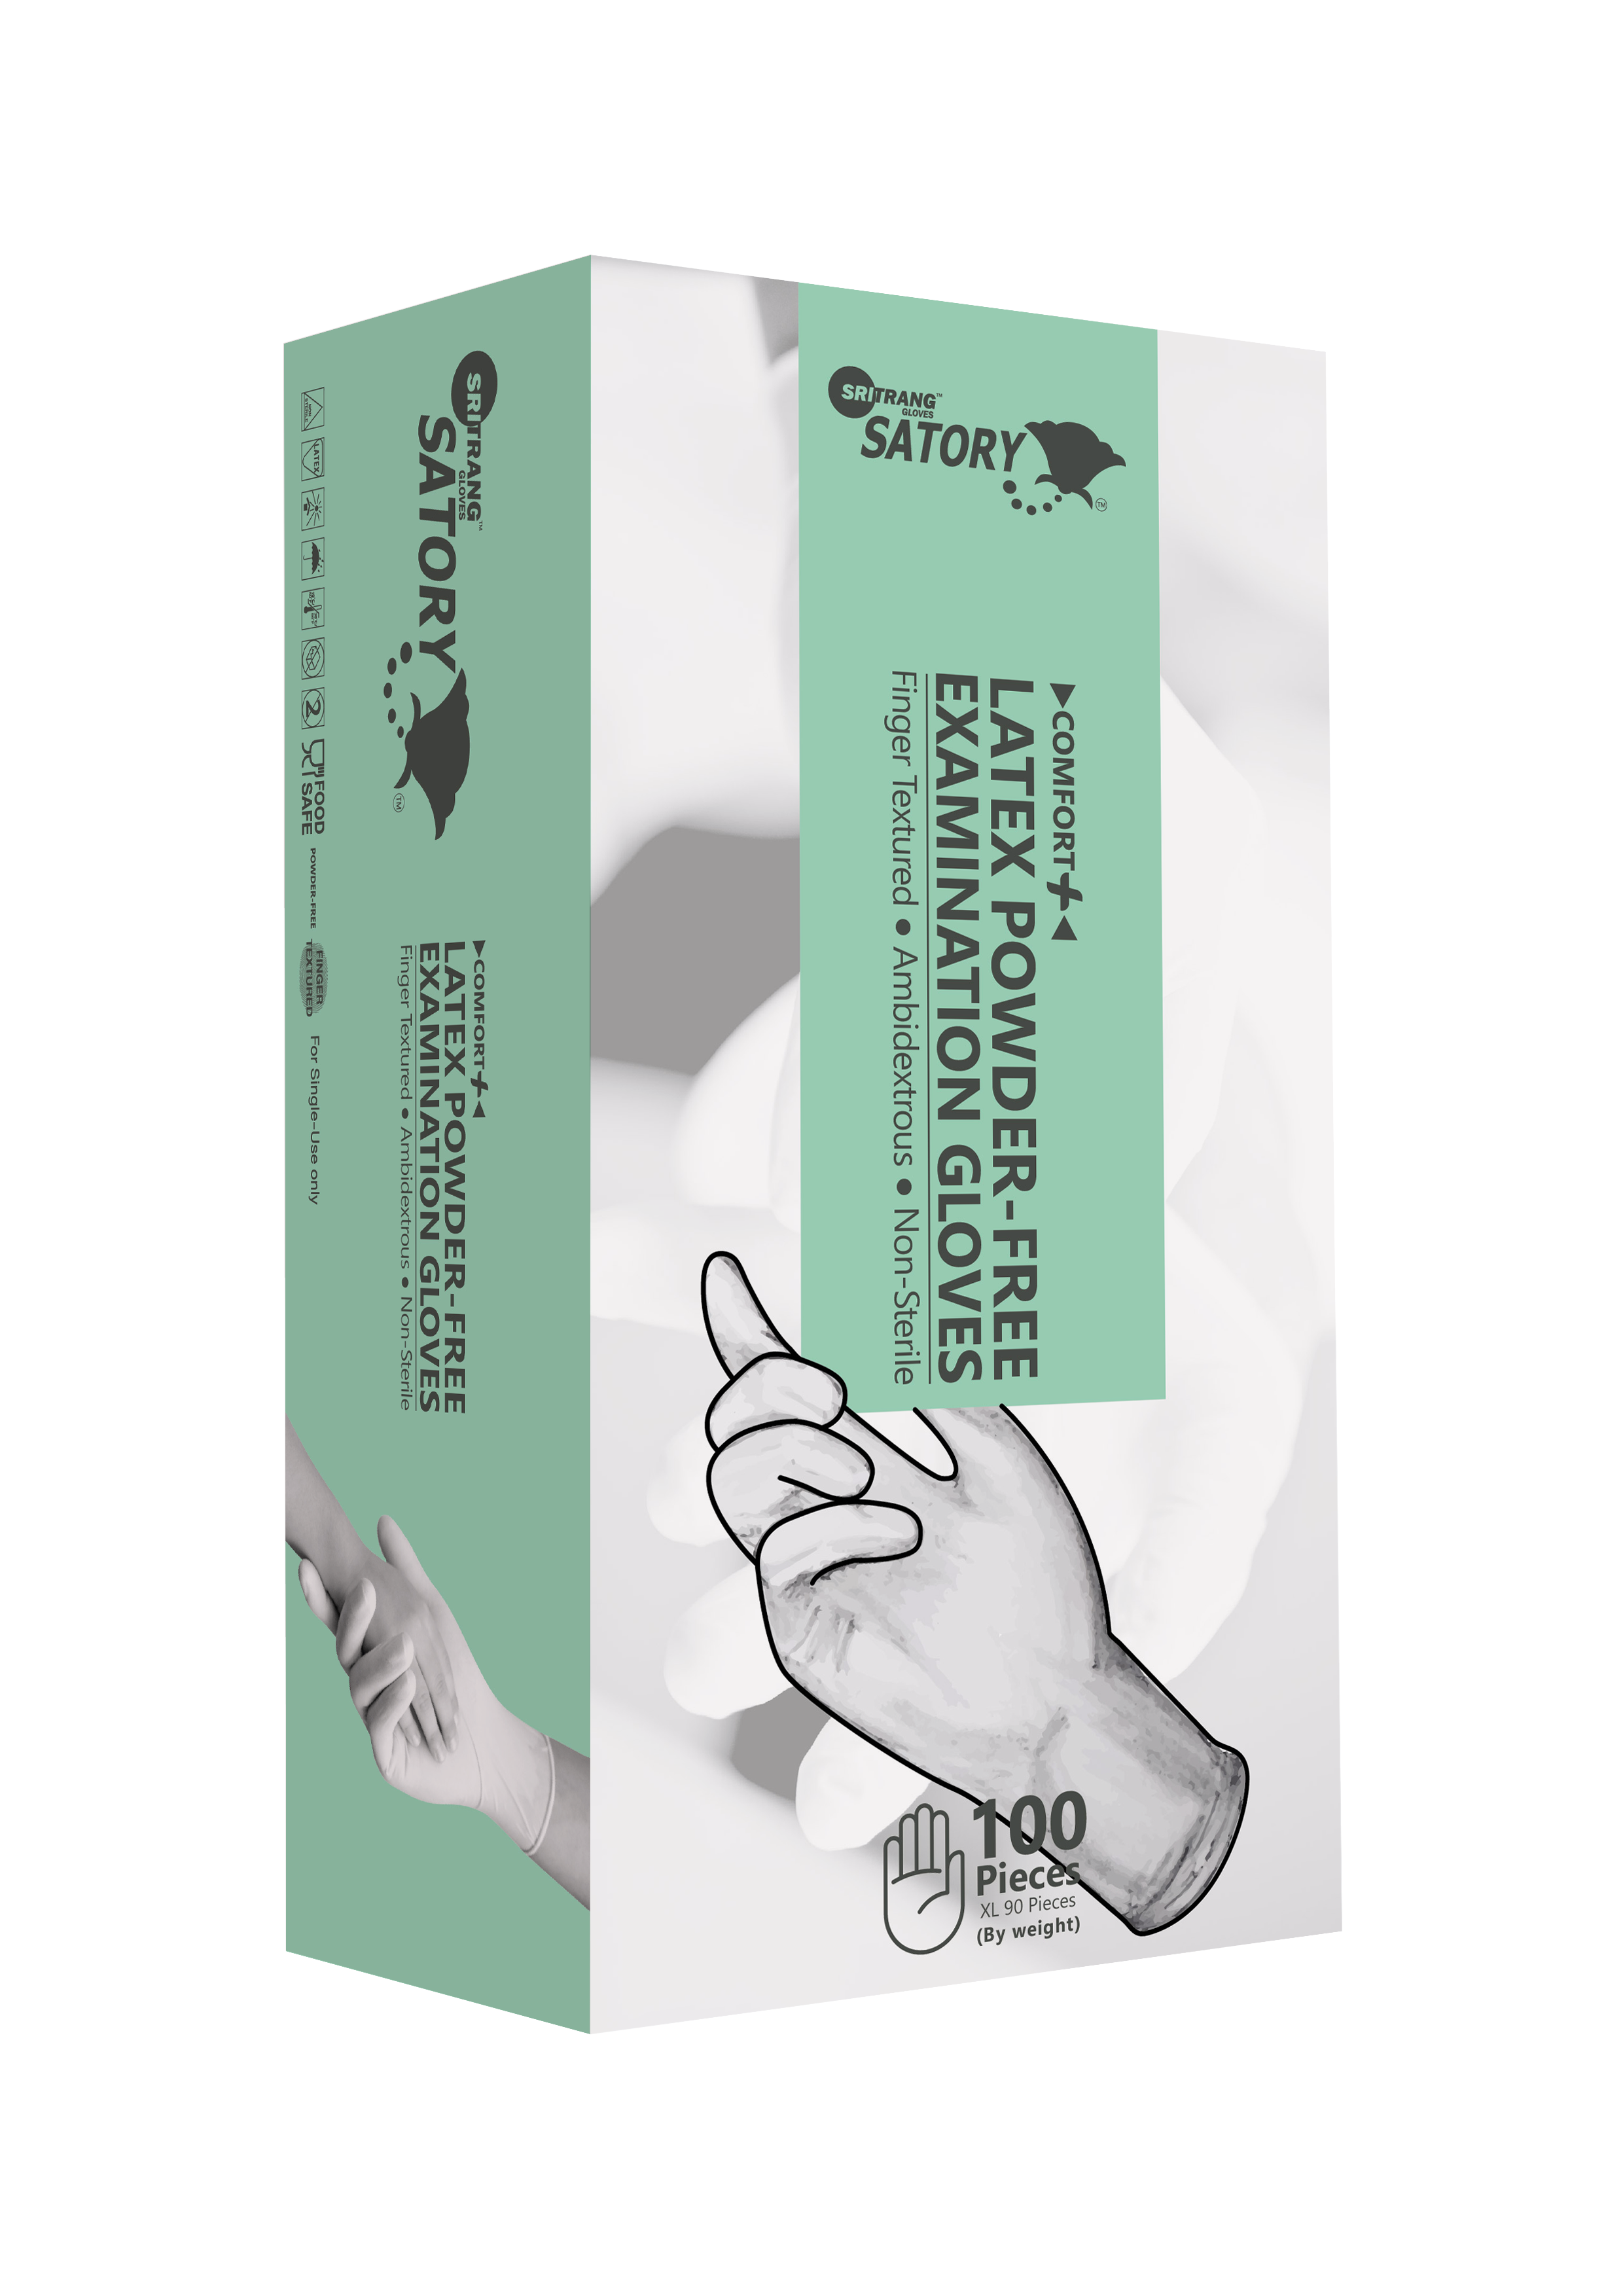 Satory Comfort+ Latex Powder-free Examination Gloves 